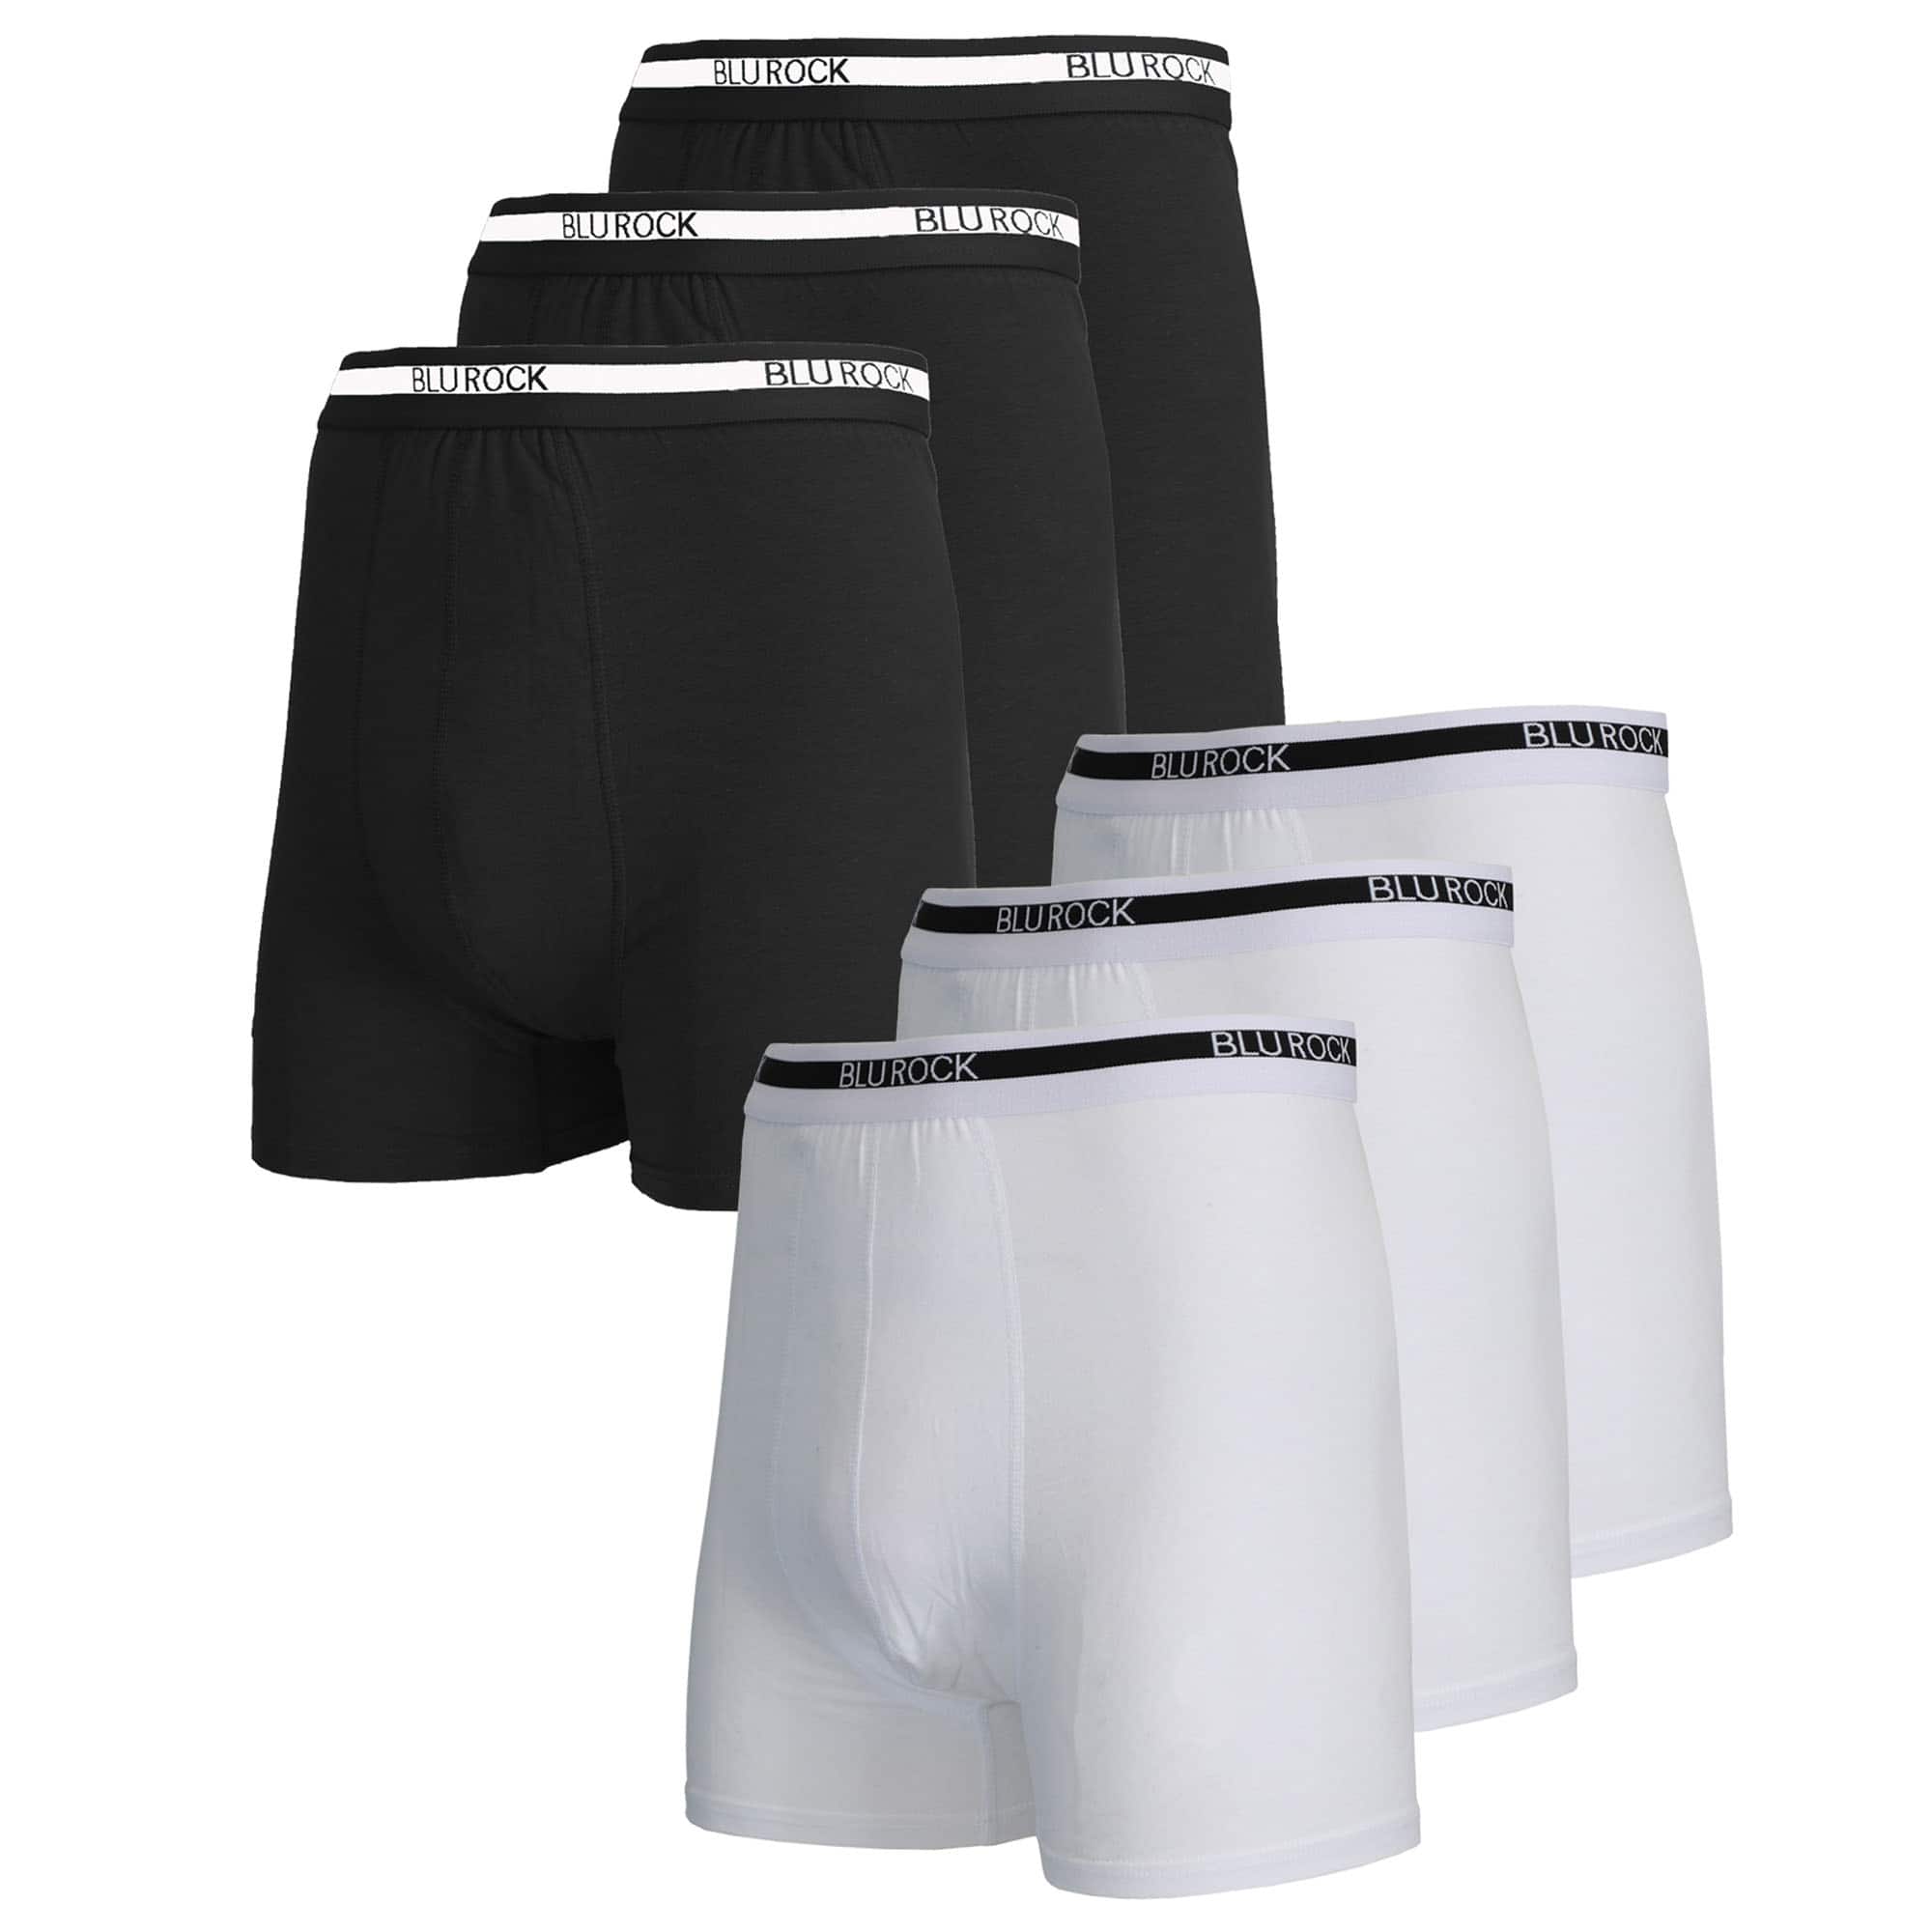 Men's Cotton Briefs, Extended Sizes White 6 Pack